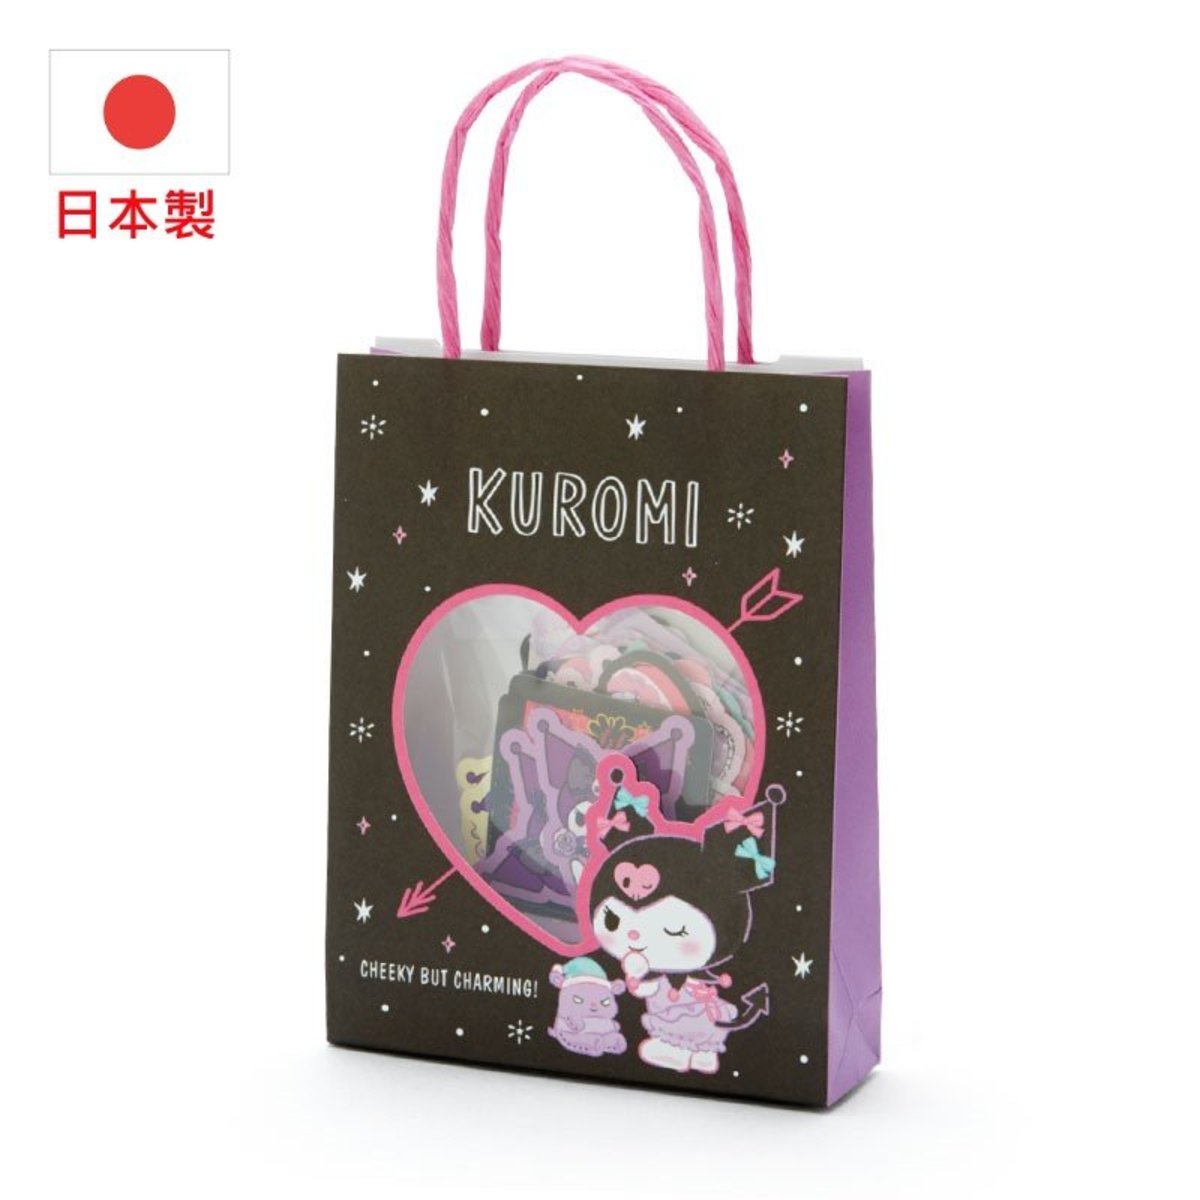 (Kuromi/手挽收納紙袋) 日本製造Sanrio 可愛貼紙 40枚 附手挽收納紙袋 x 1套